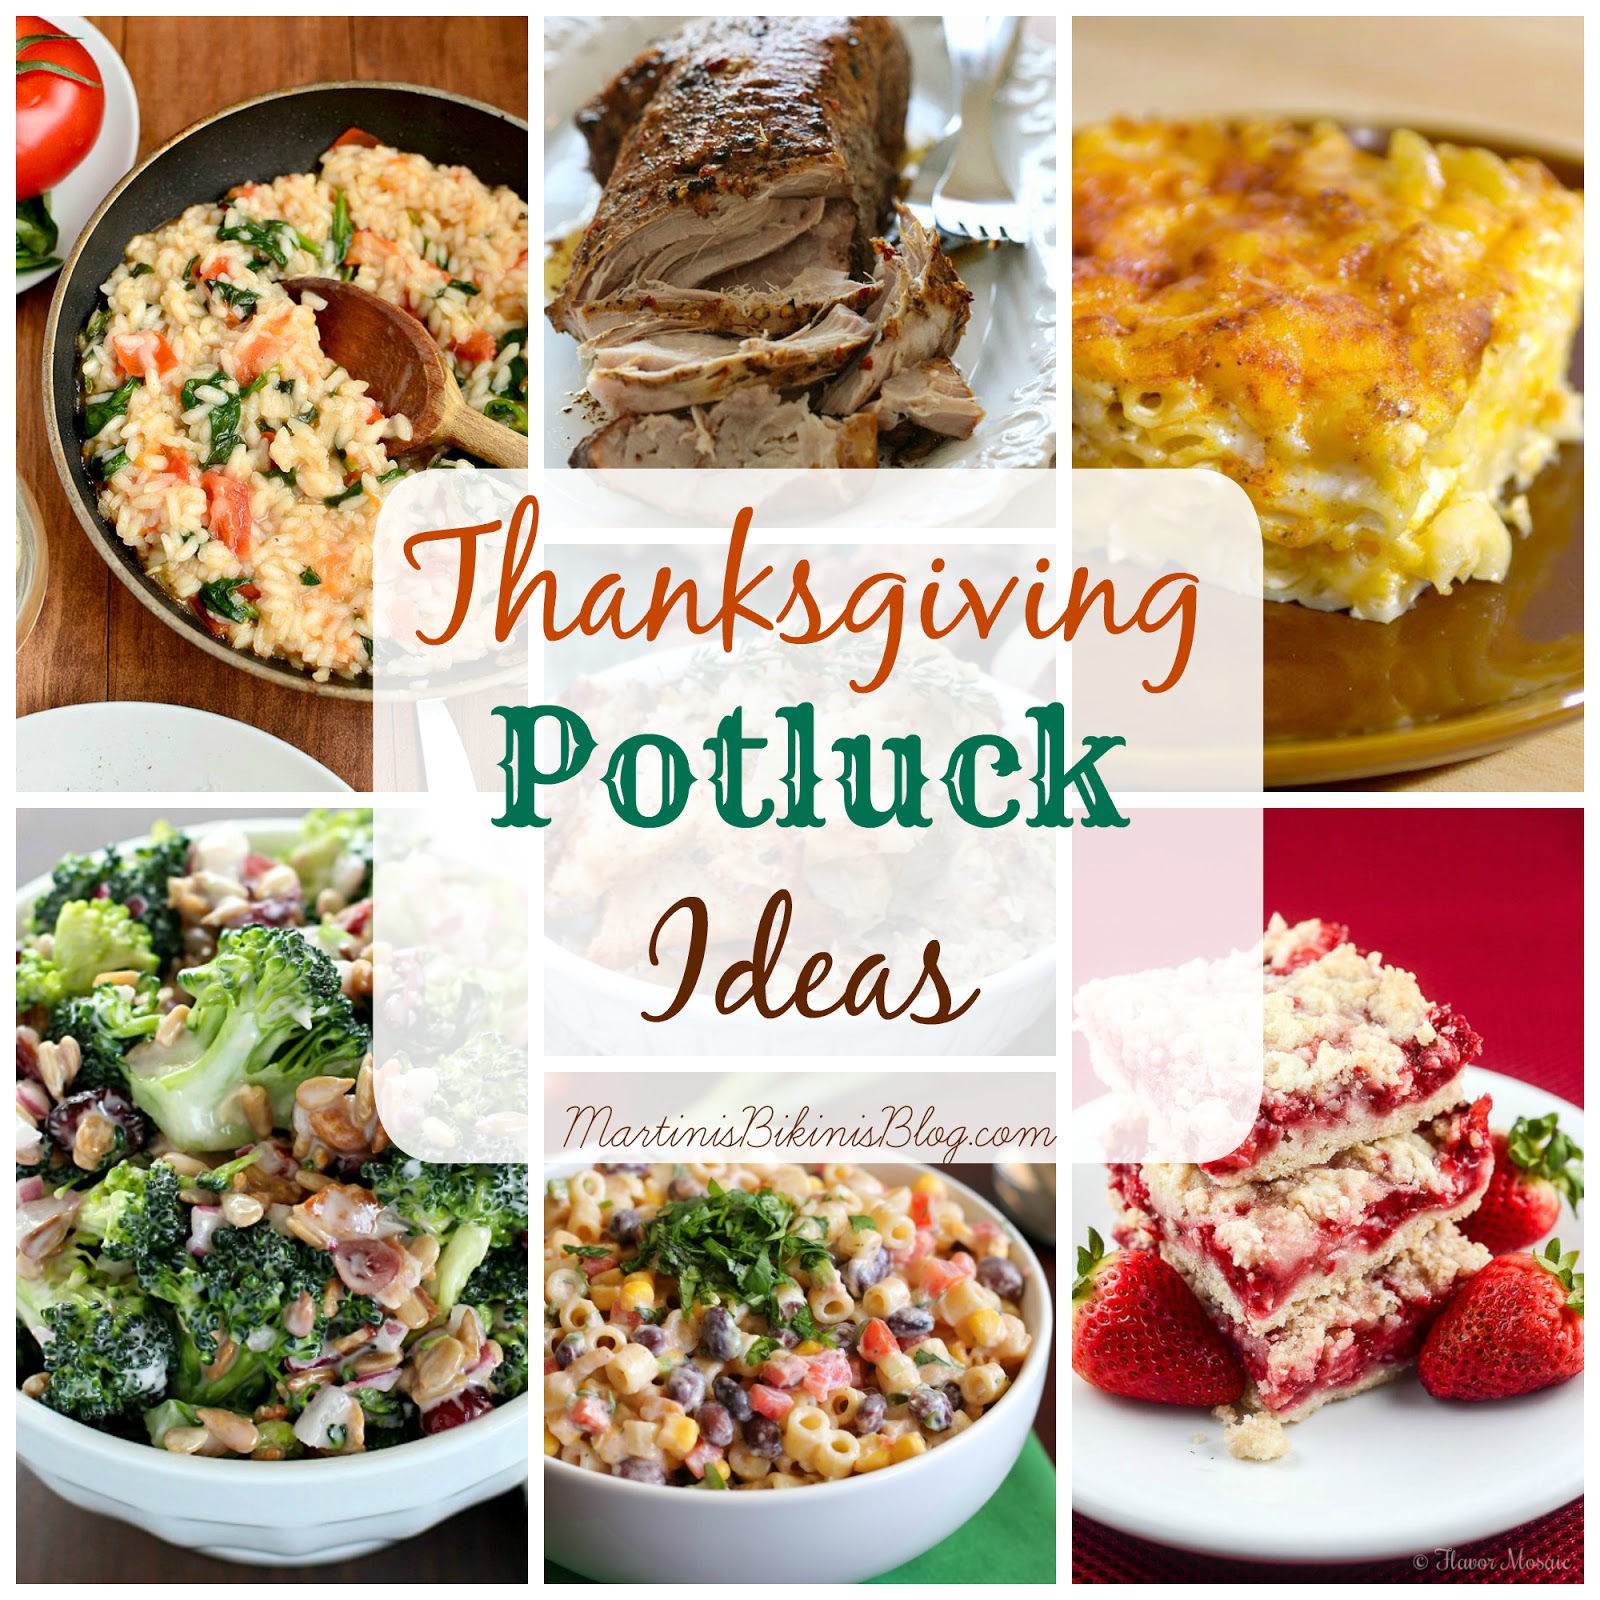 Thanksgiving Potluck Dish Ideas - Martinis | Bikinis